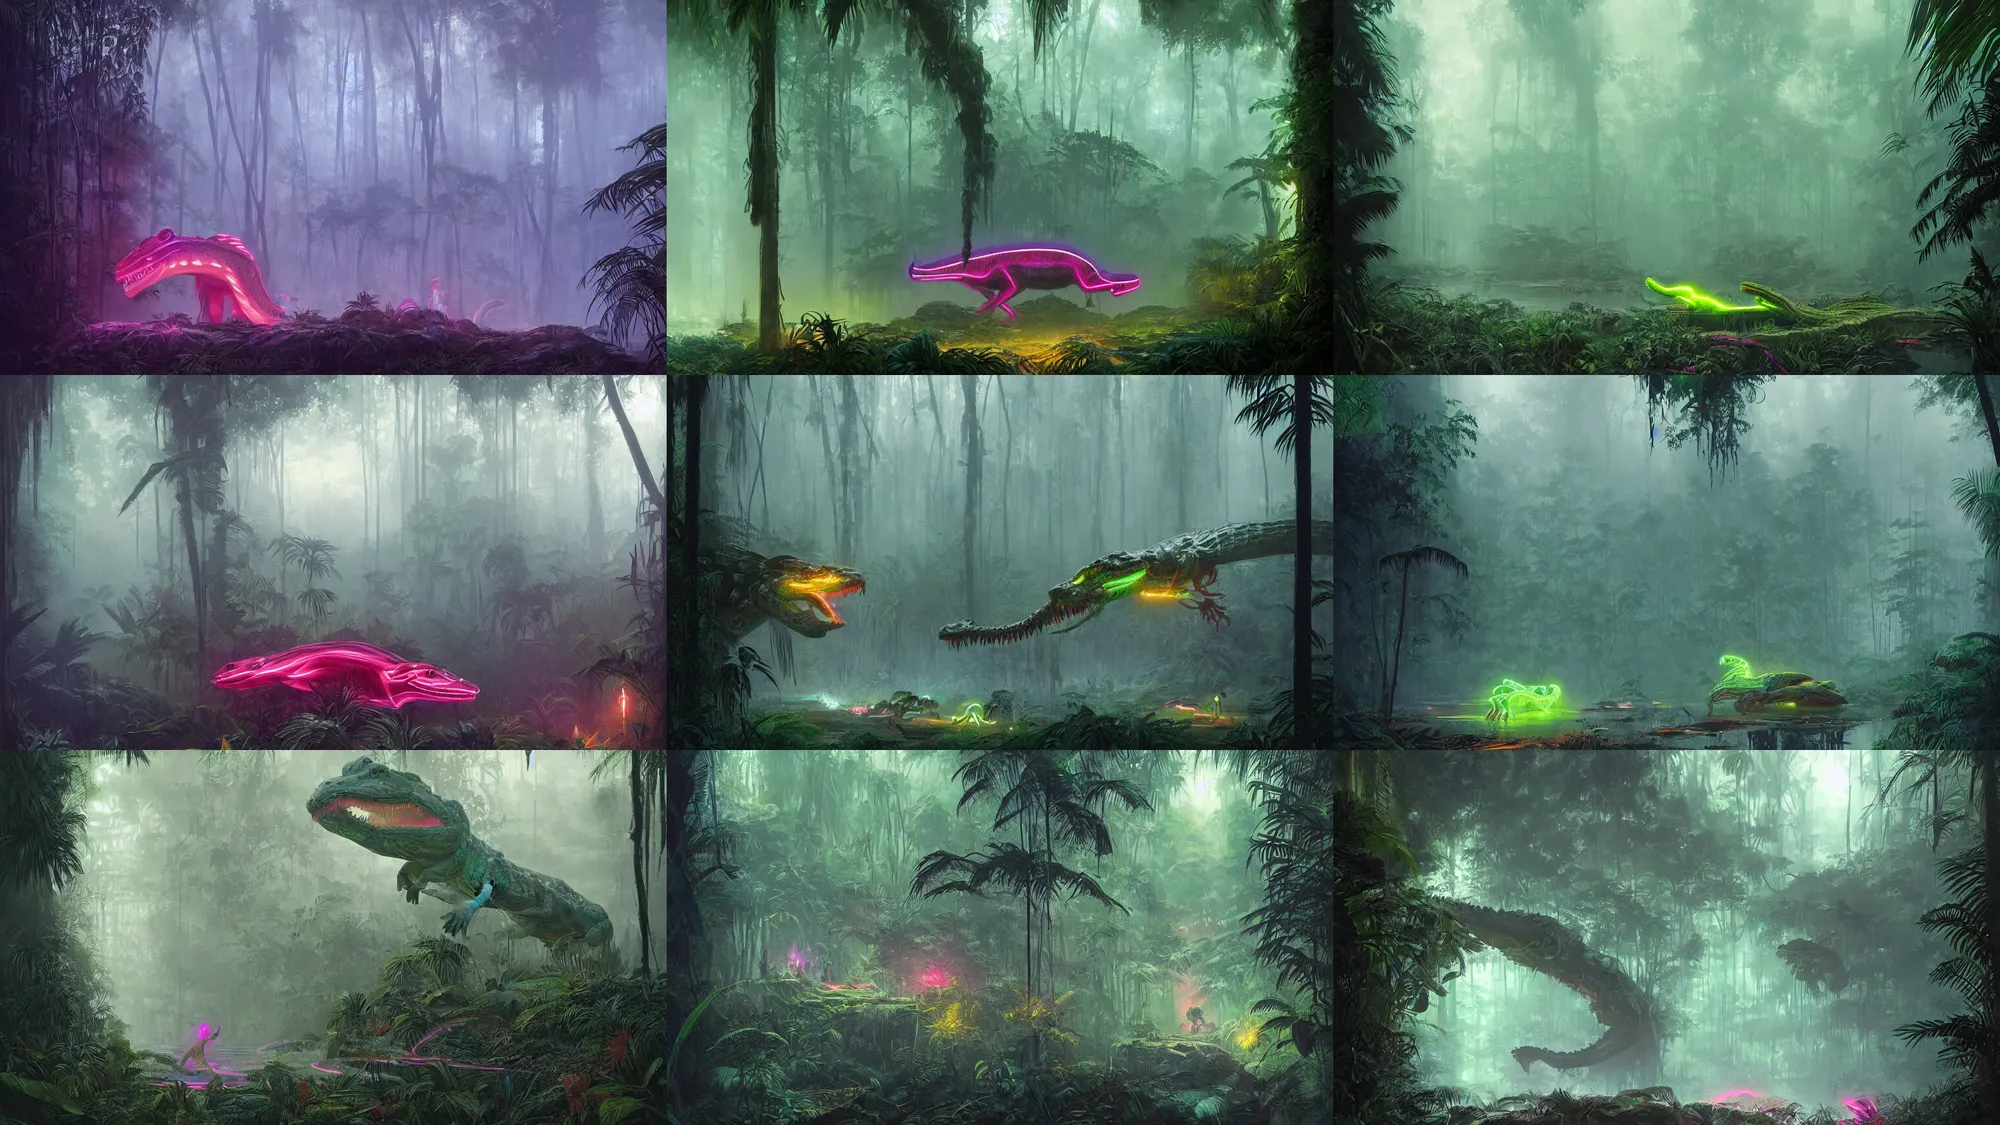 Prompt: neon glowing alligator in a foggy jungle by magali villeneuve and greg rutkowski